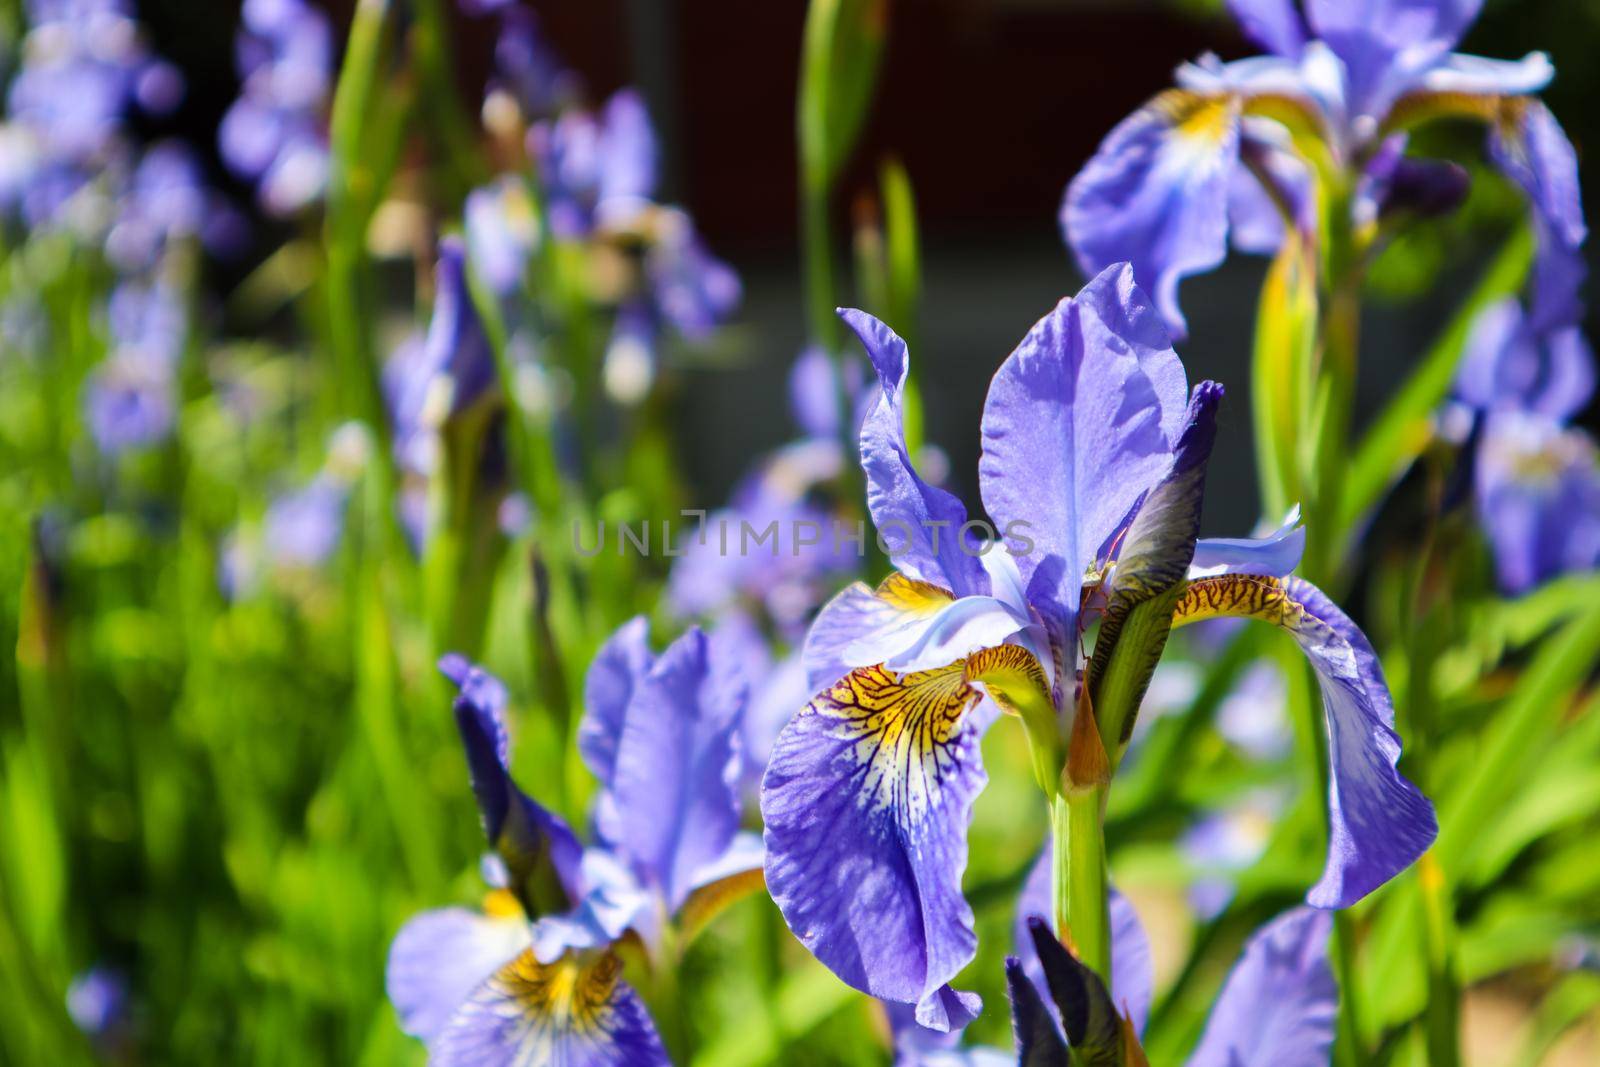 Blooming violet iris flowers in the garden. Gardening concept. Flower background by Olayola